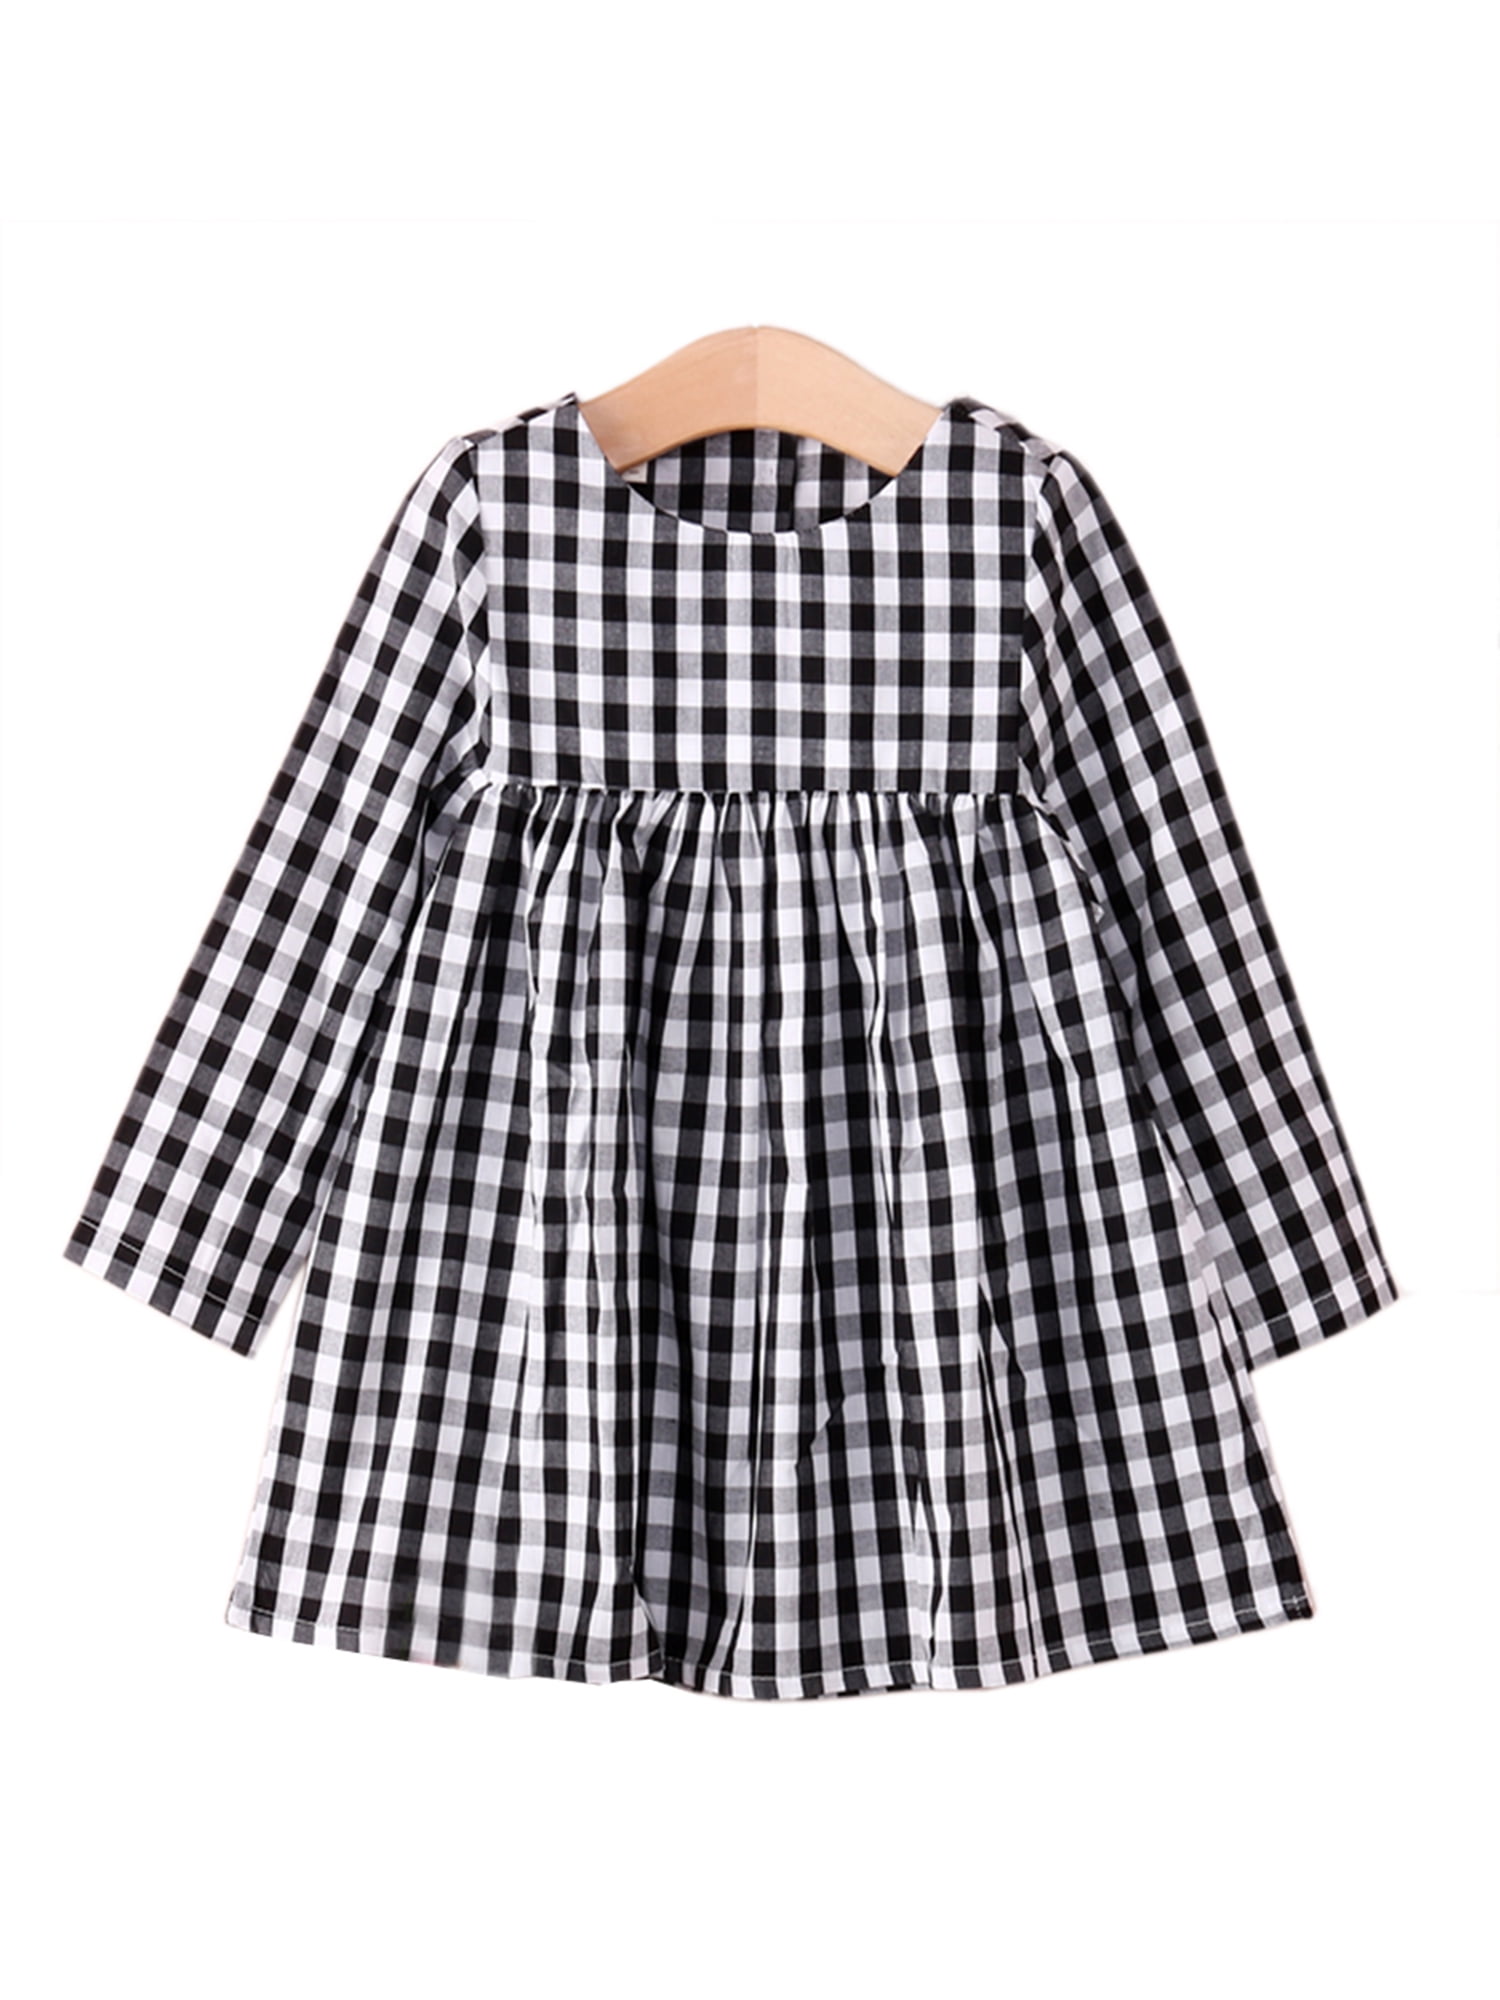 black and white checkered dress